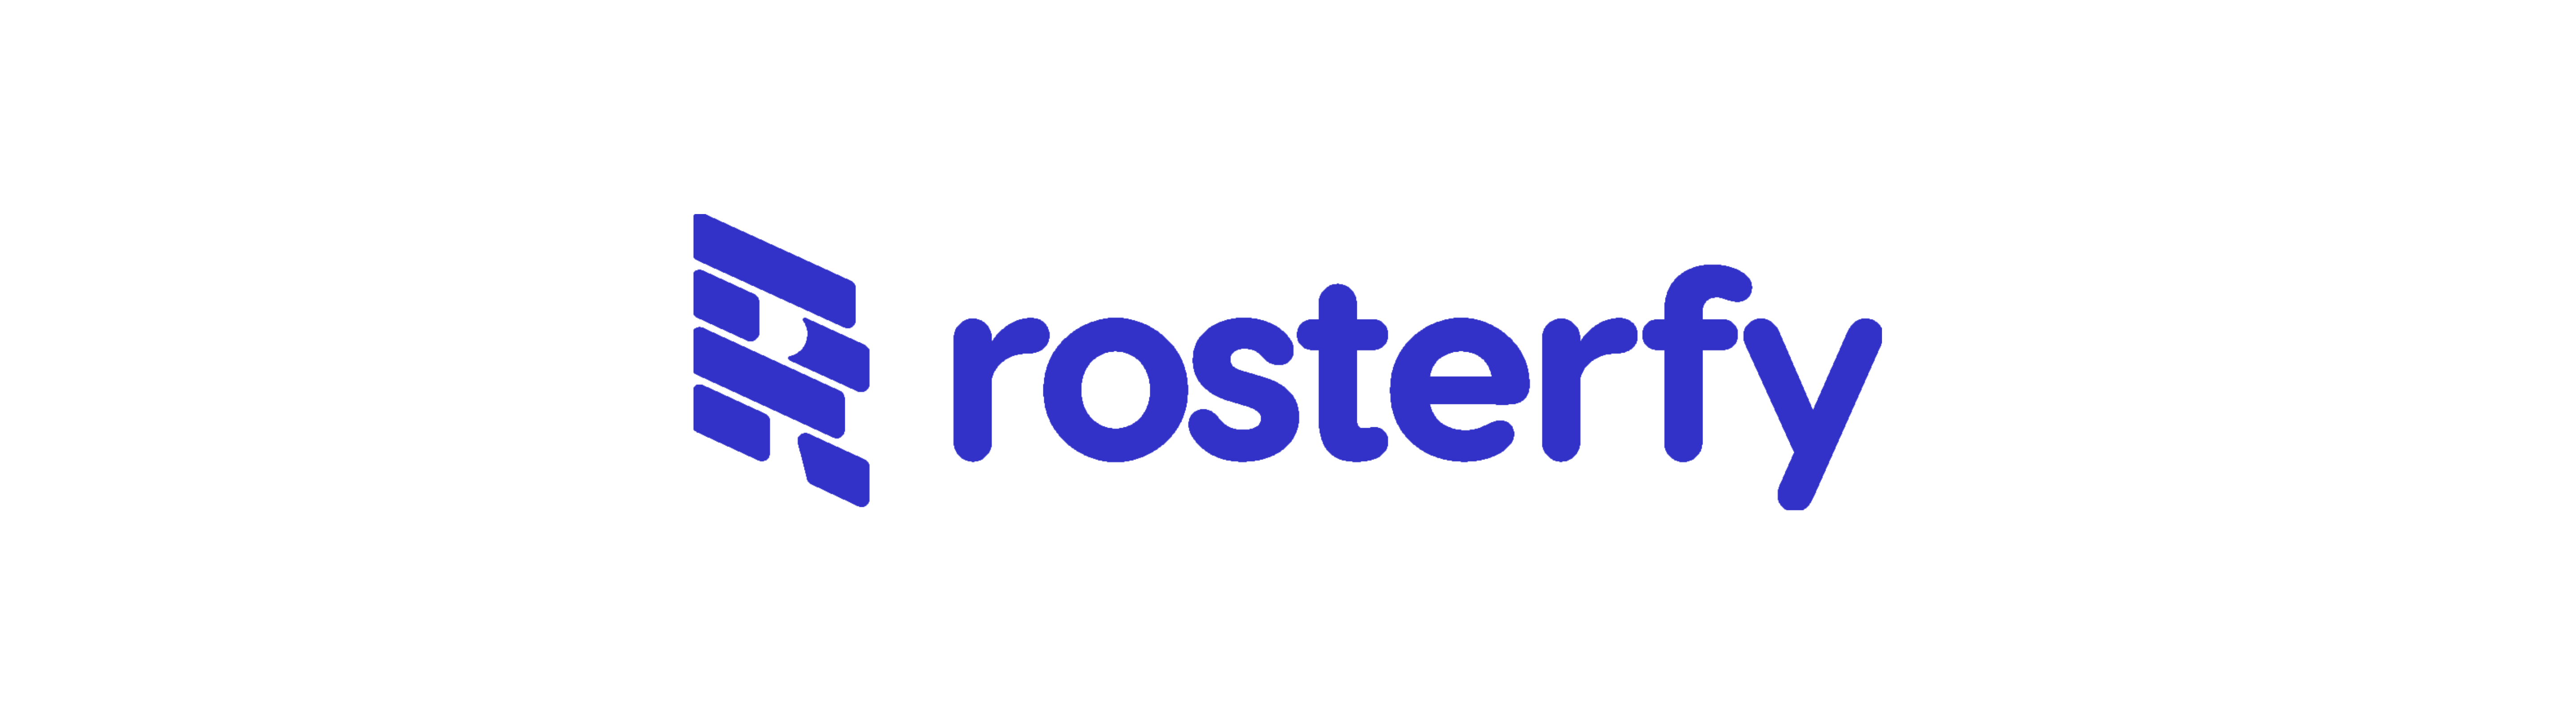 rosterfy_logo_blue